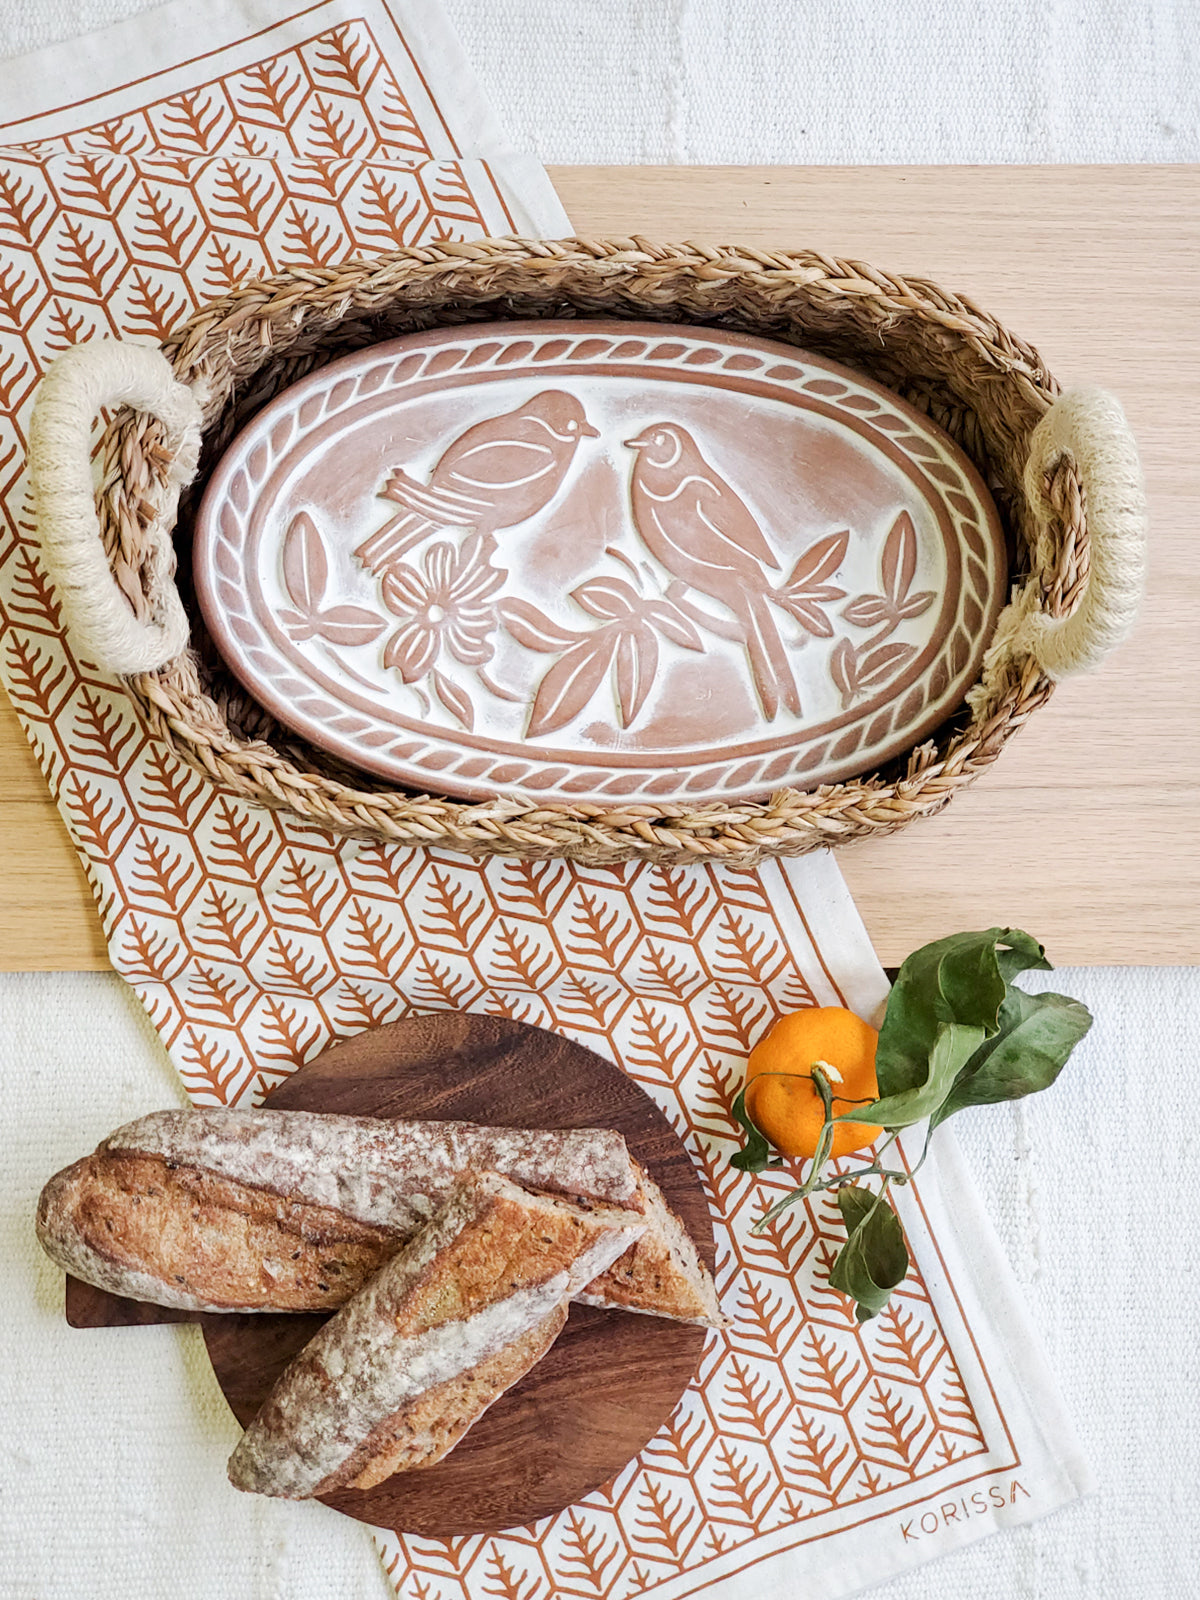 
                  
                    Bread Warmer & Basket Gift Set with Tea Towel - Lovebird Oval by KORISSA
                  
                